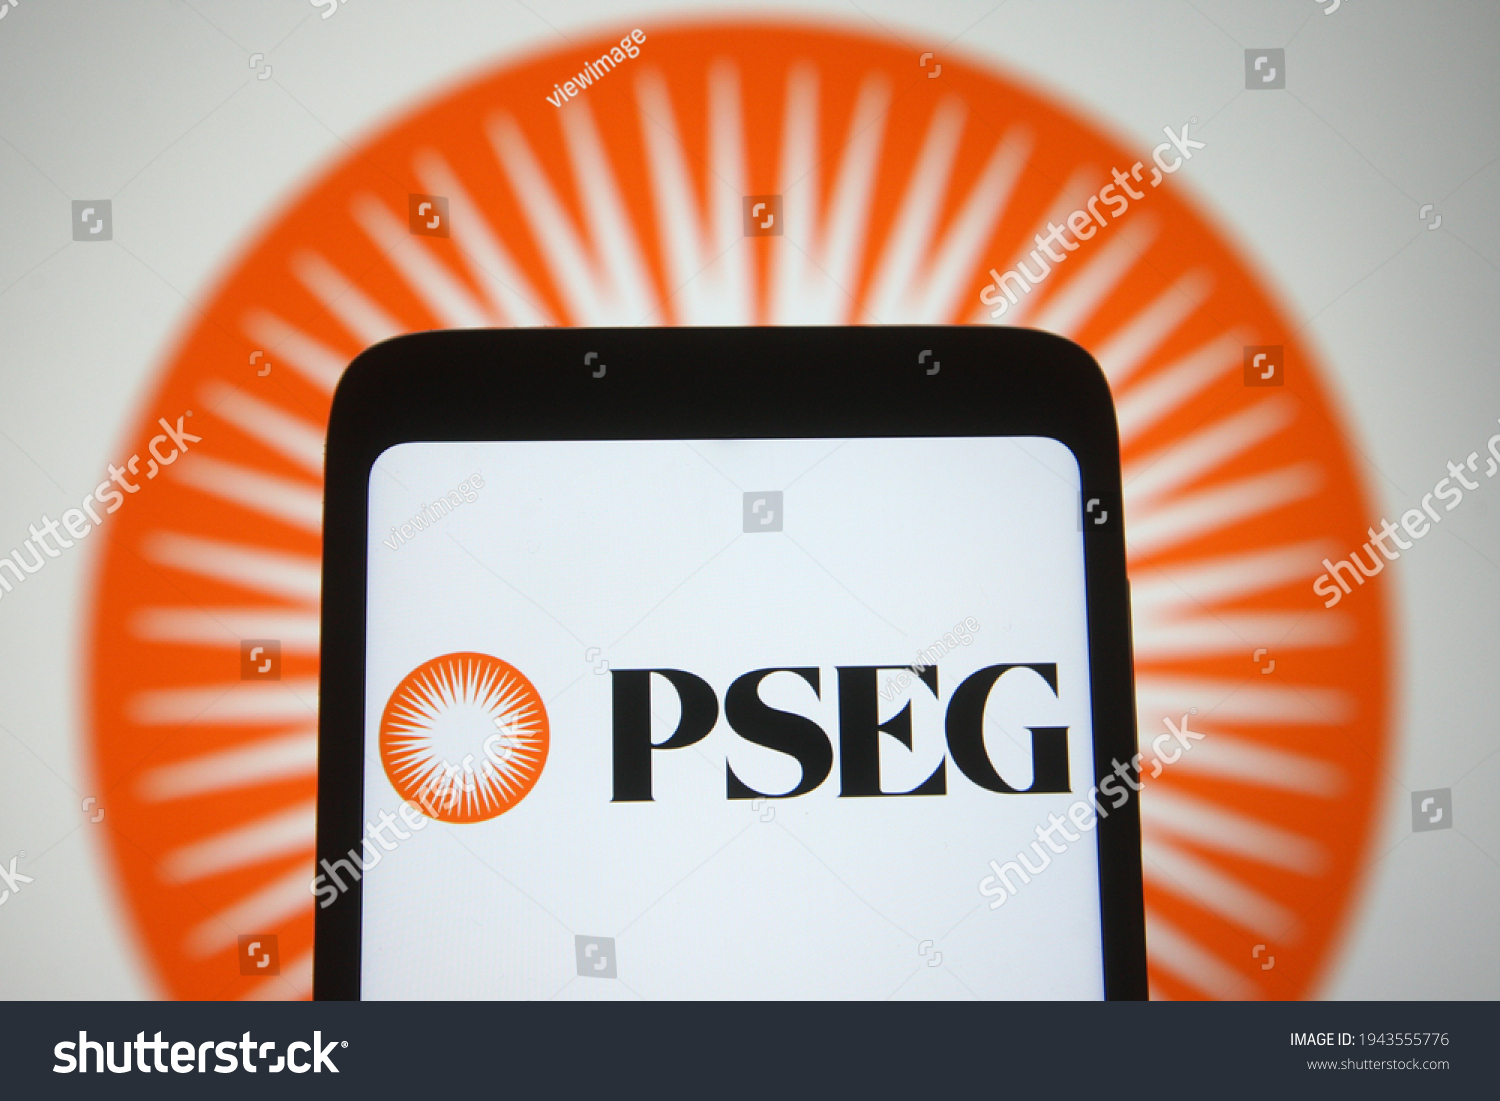 3-pseg-logo-images-stock-photos-vectors-shutterstock